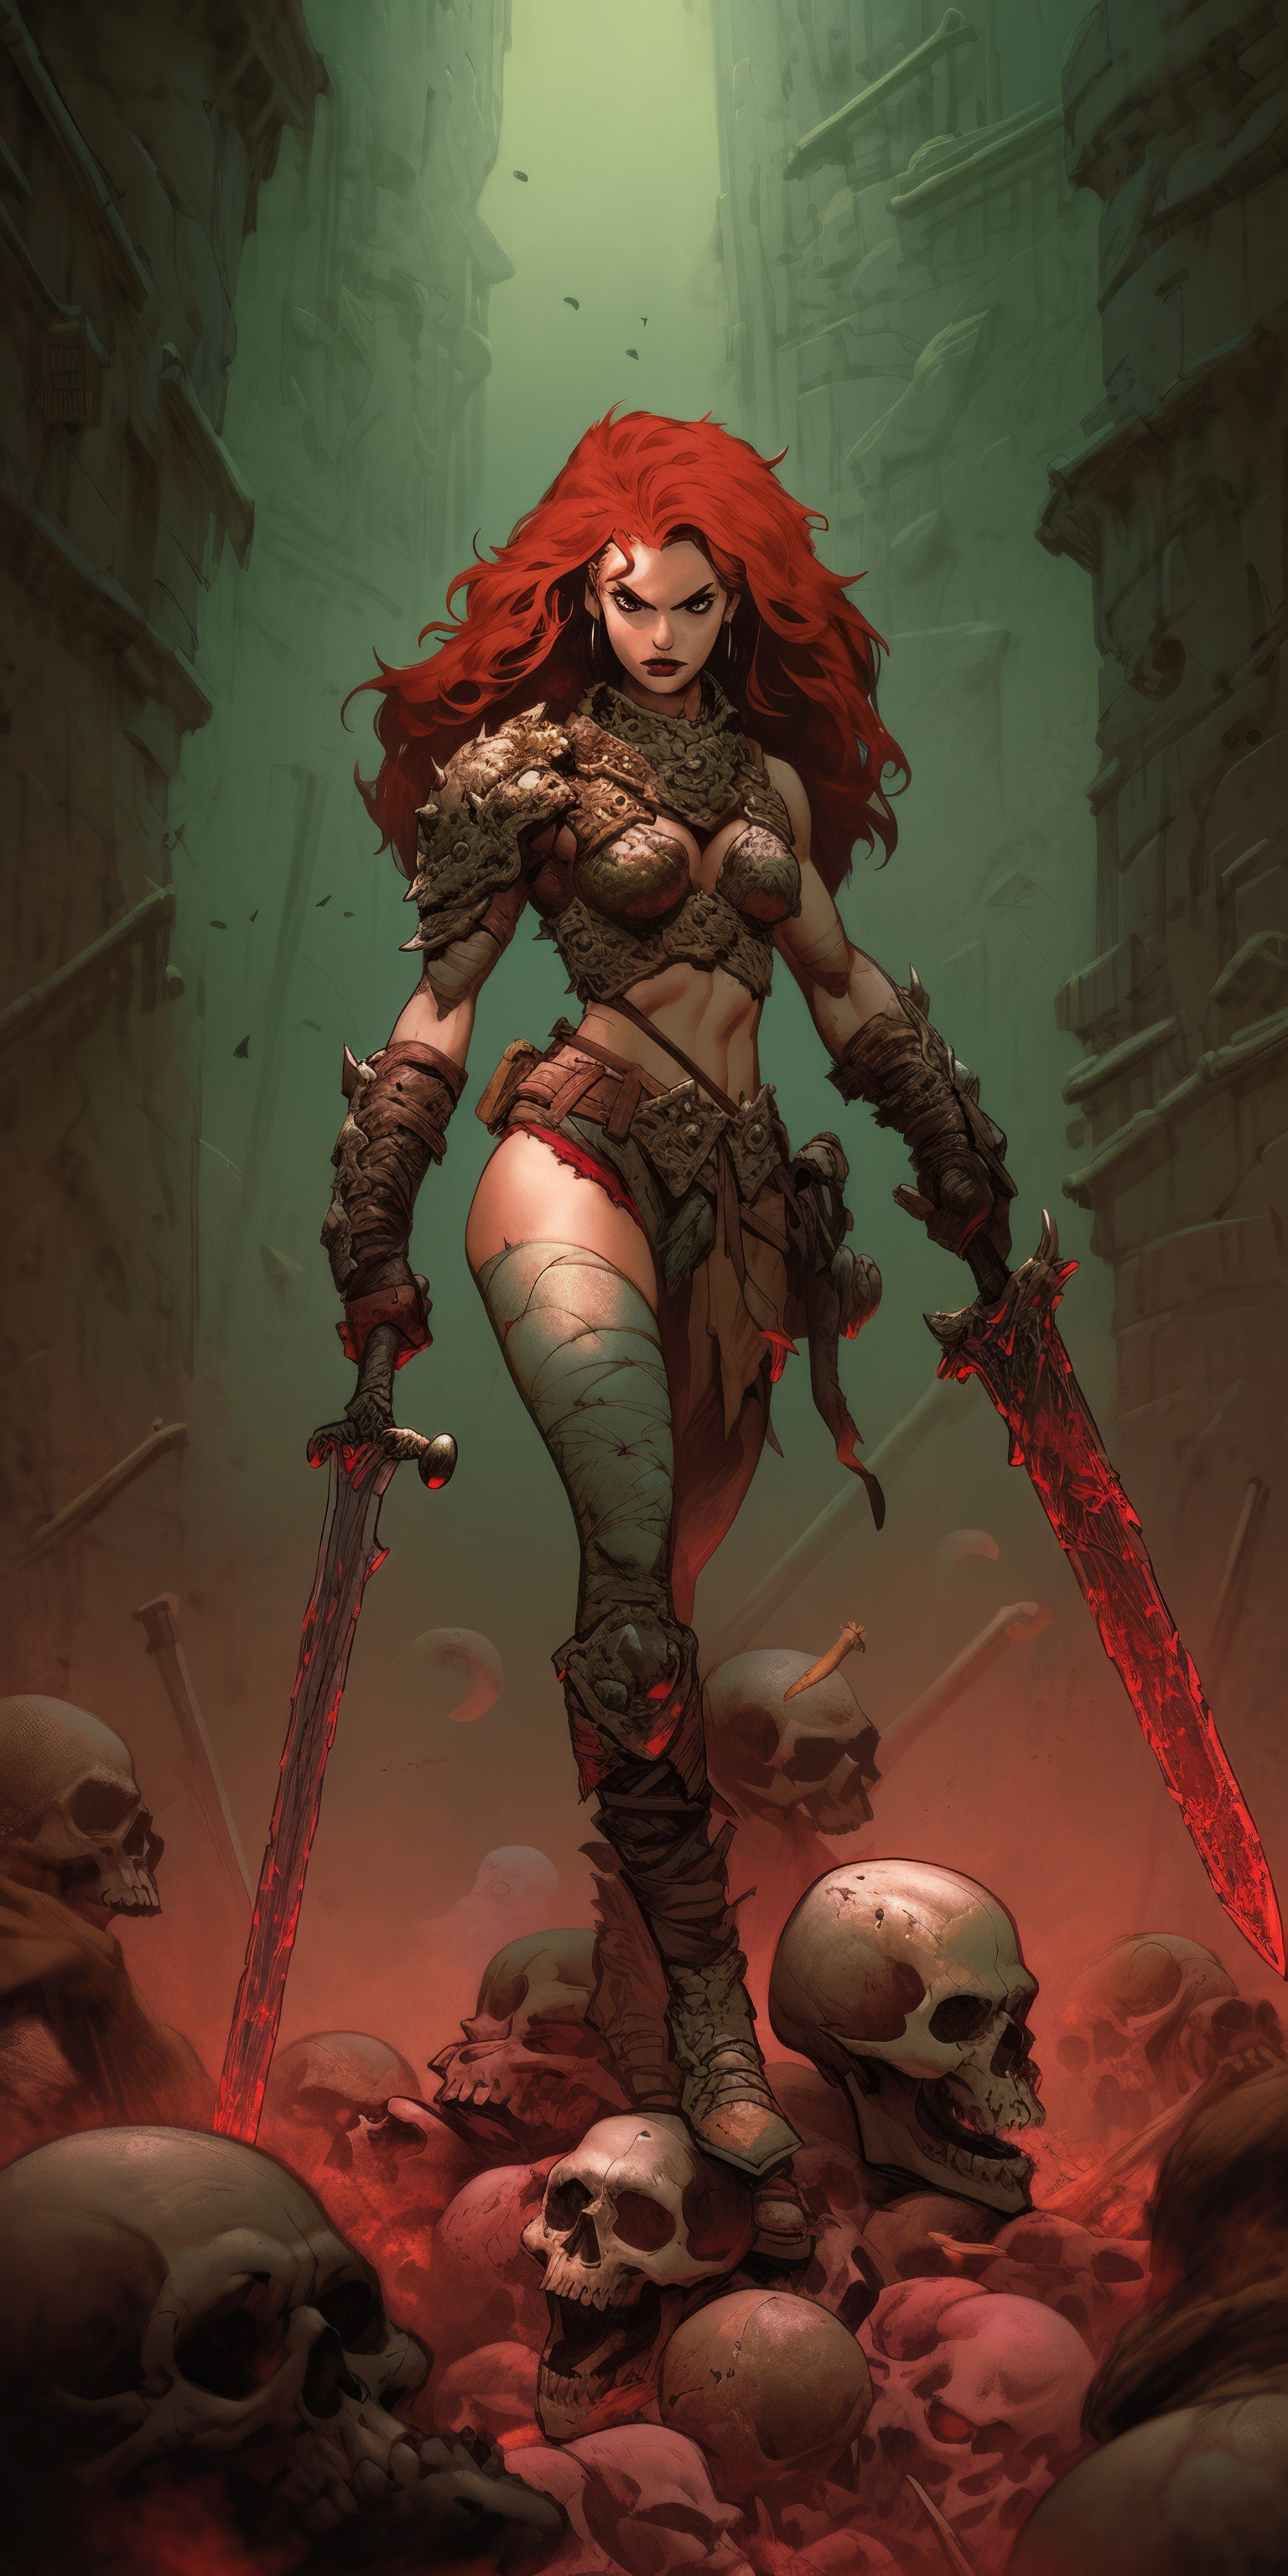 General 1536x3072 AI art Red Sonja skull and bones redhead illustration portrait display women digital art looking at viewer long hair sword weapon skull angry